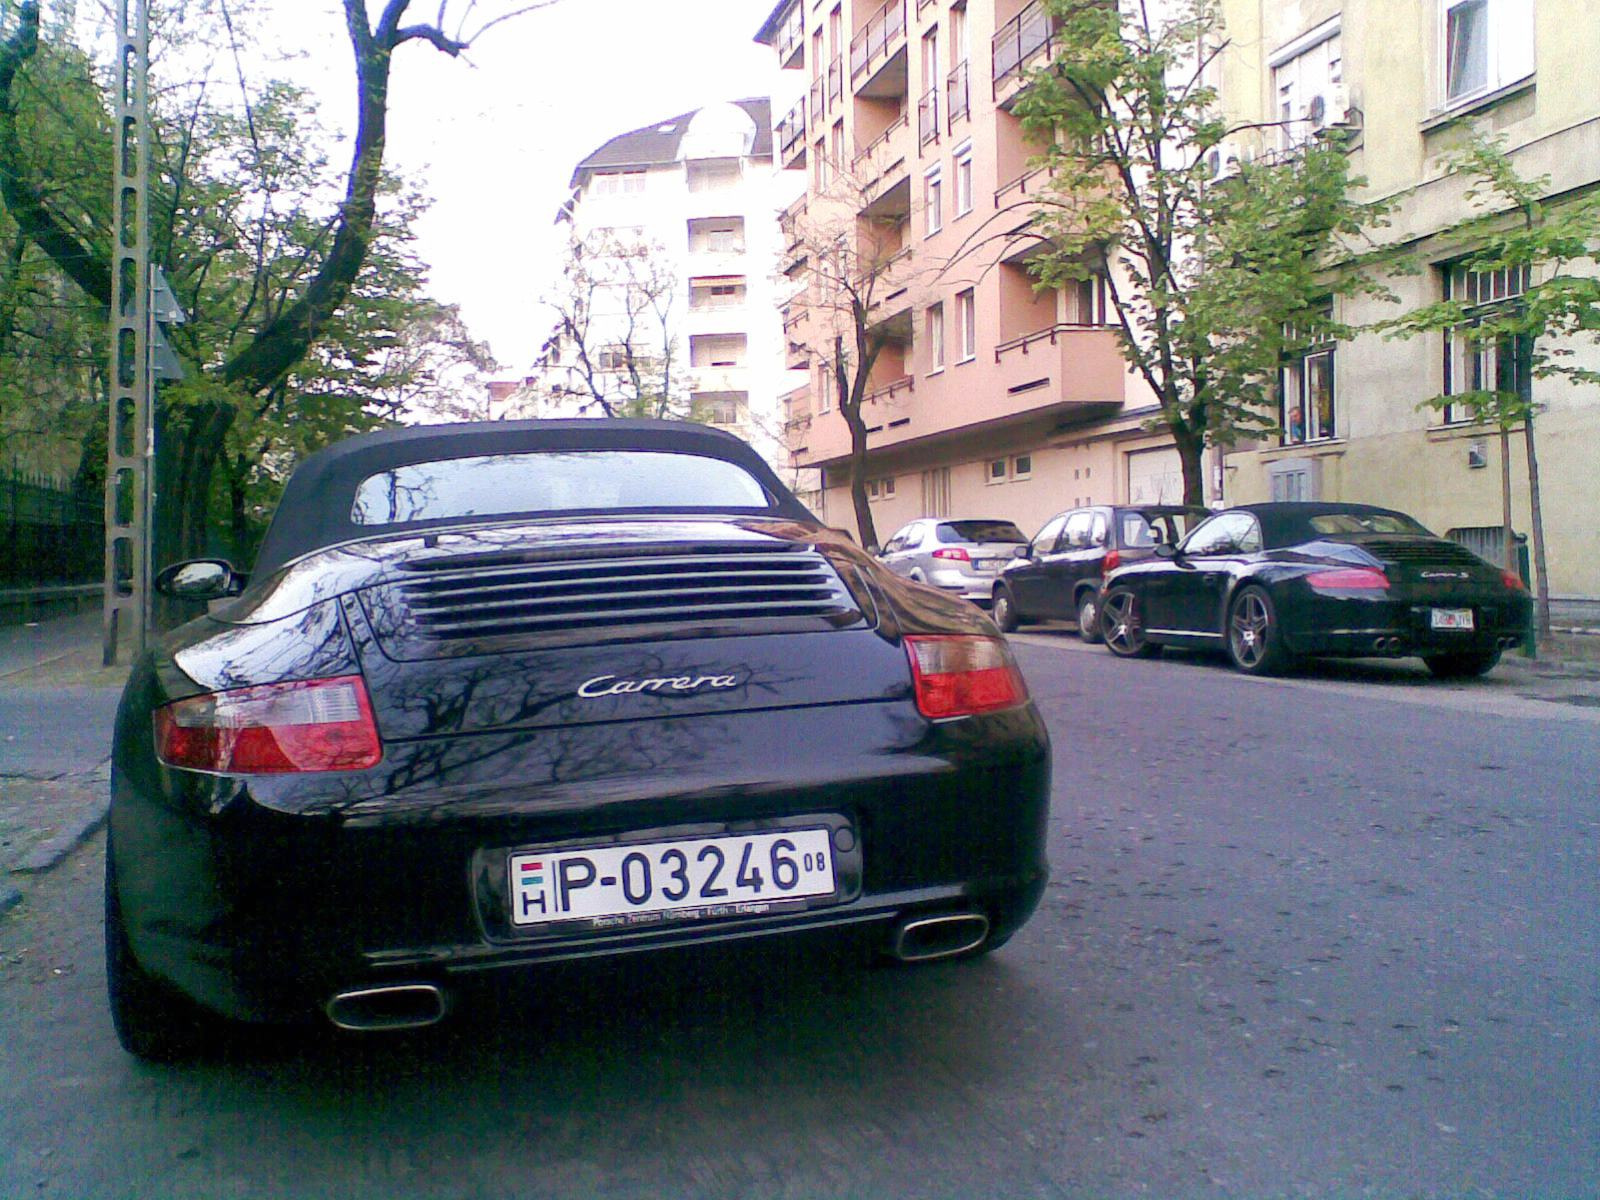 Porsche 911 Carrera Cabrio - Porsche 911 Carrera S Cabrio combo